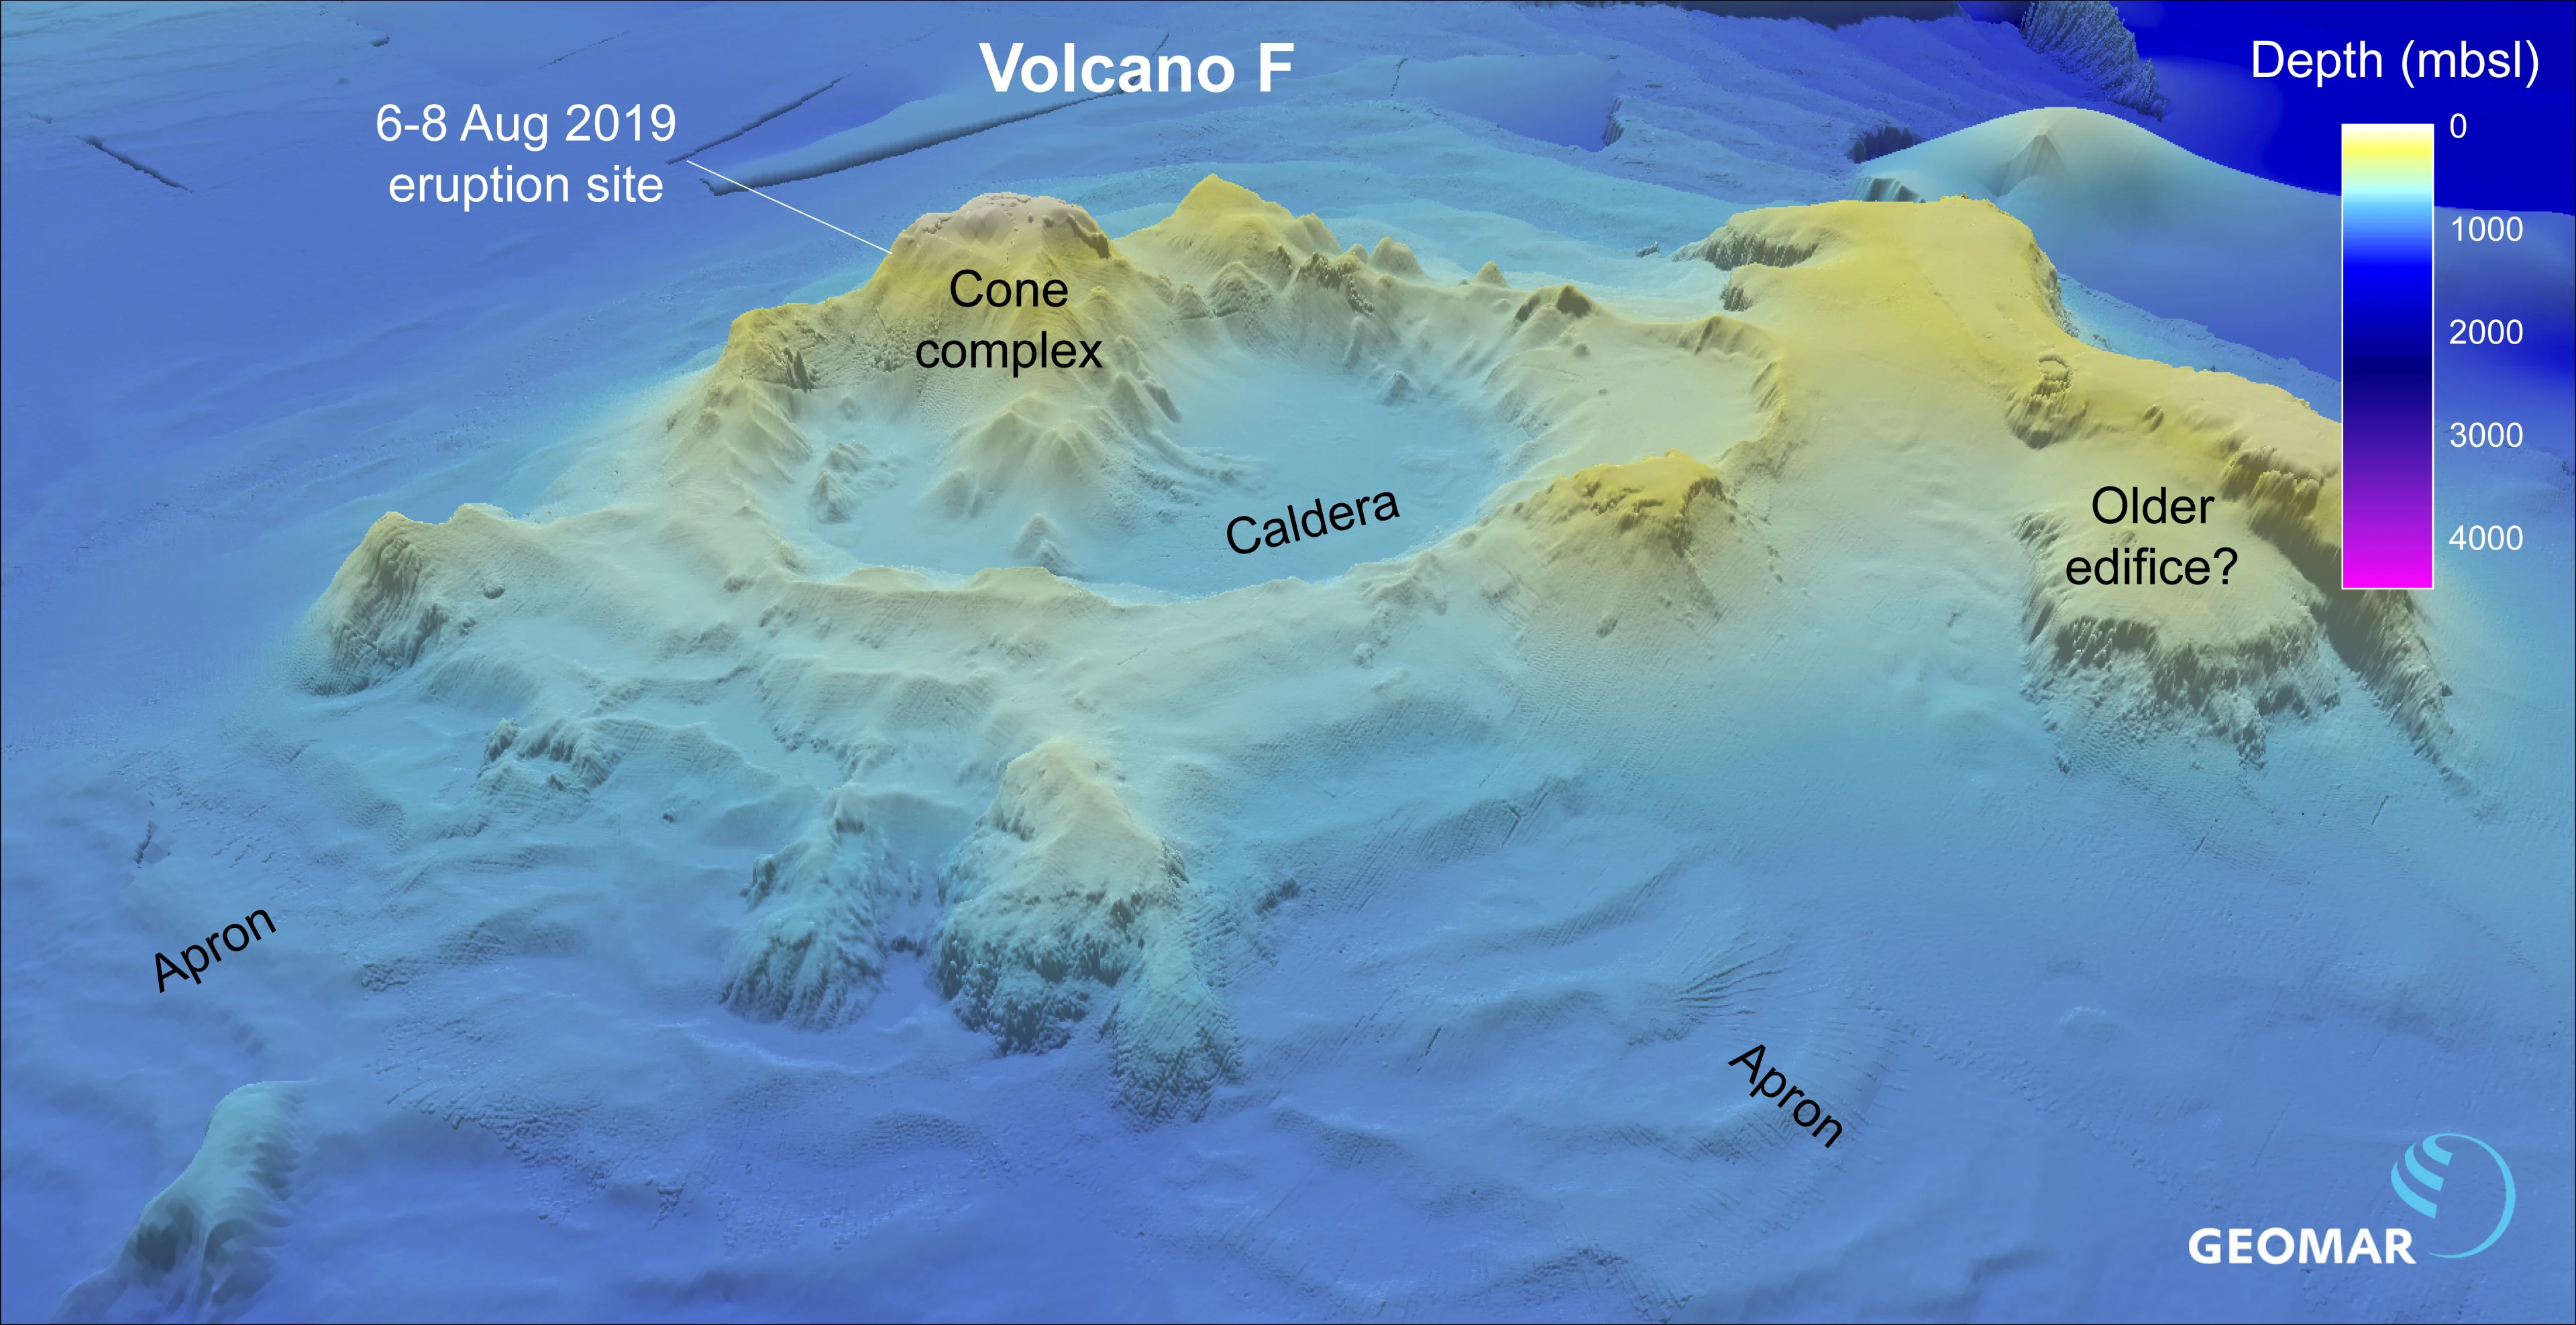 Volcano F geomar